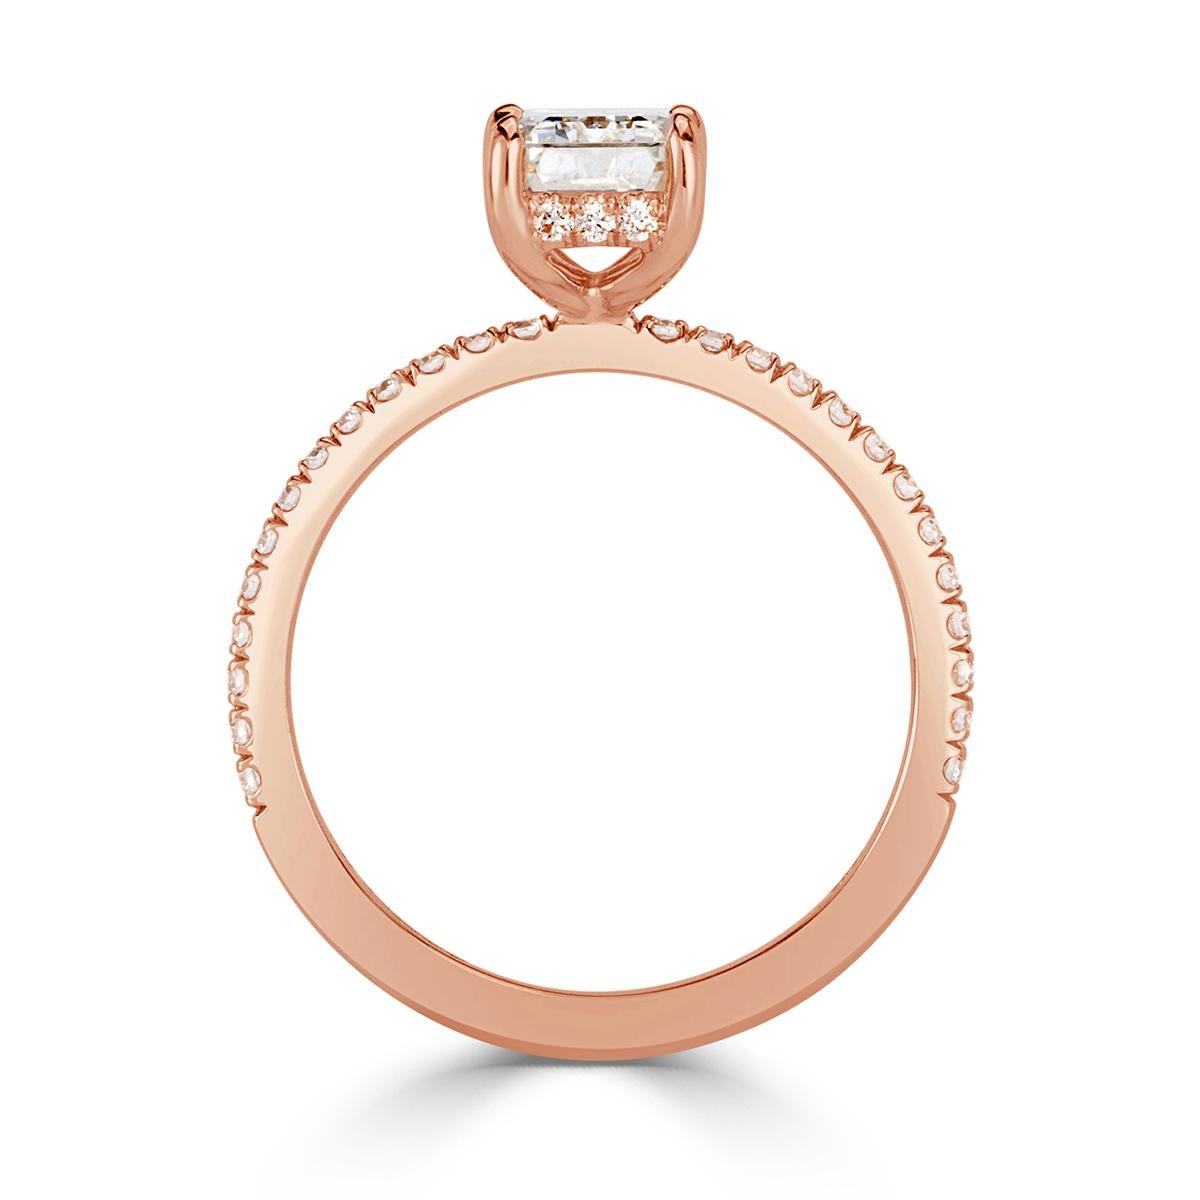 Women's or Men's Mark Broumand 1.84 Carat Emerald Cut Diamond Engagement Ring